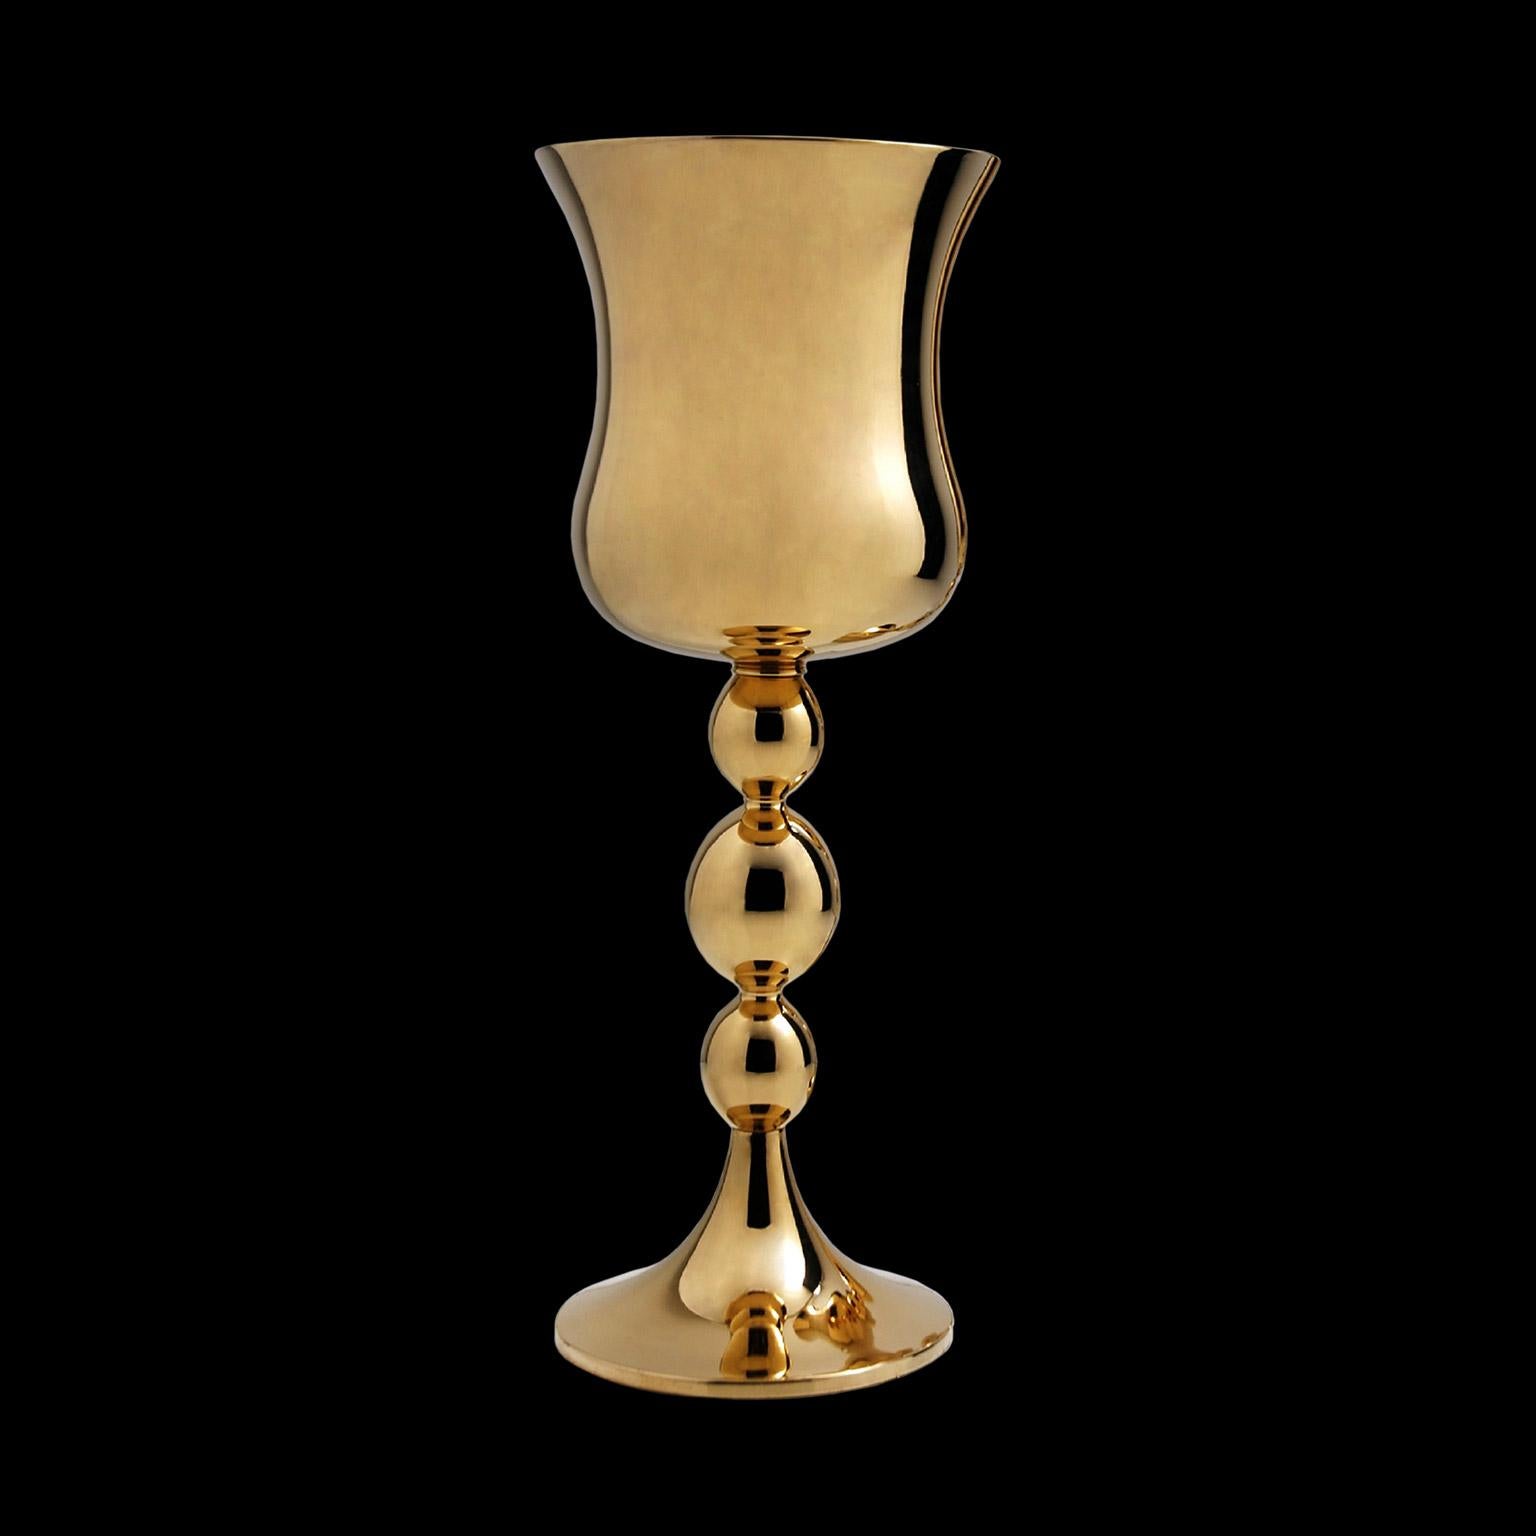 Ceramic vase KIM
cod. CP007
handcrafted in 24-karat gold

Measures: 
H. 90.0 cm.
Dm. 35.0 cm.